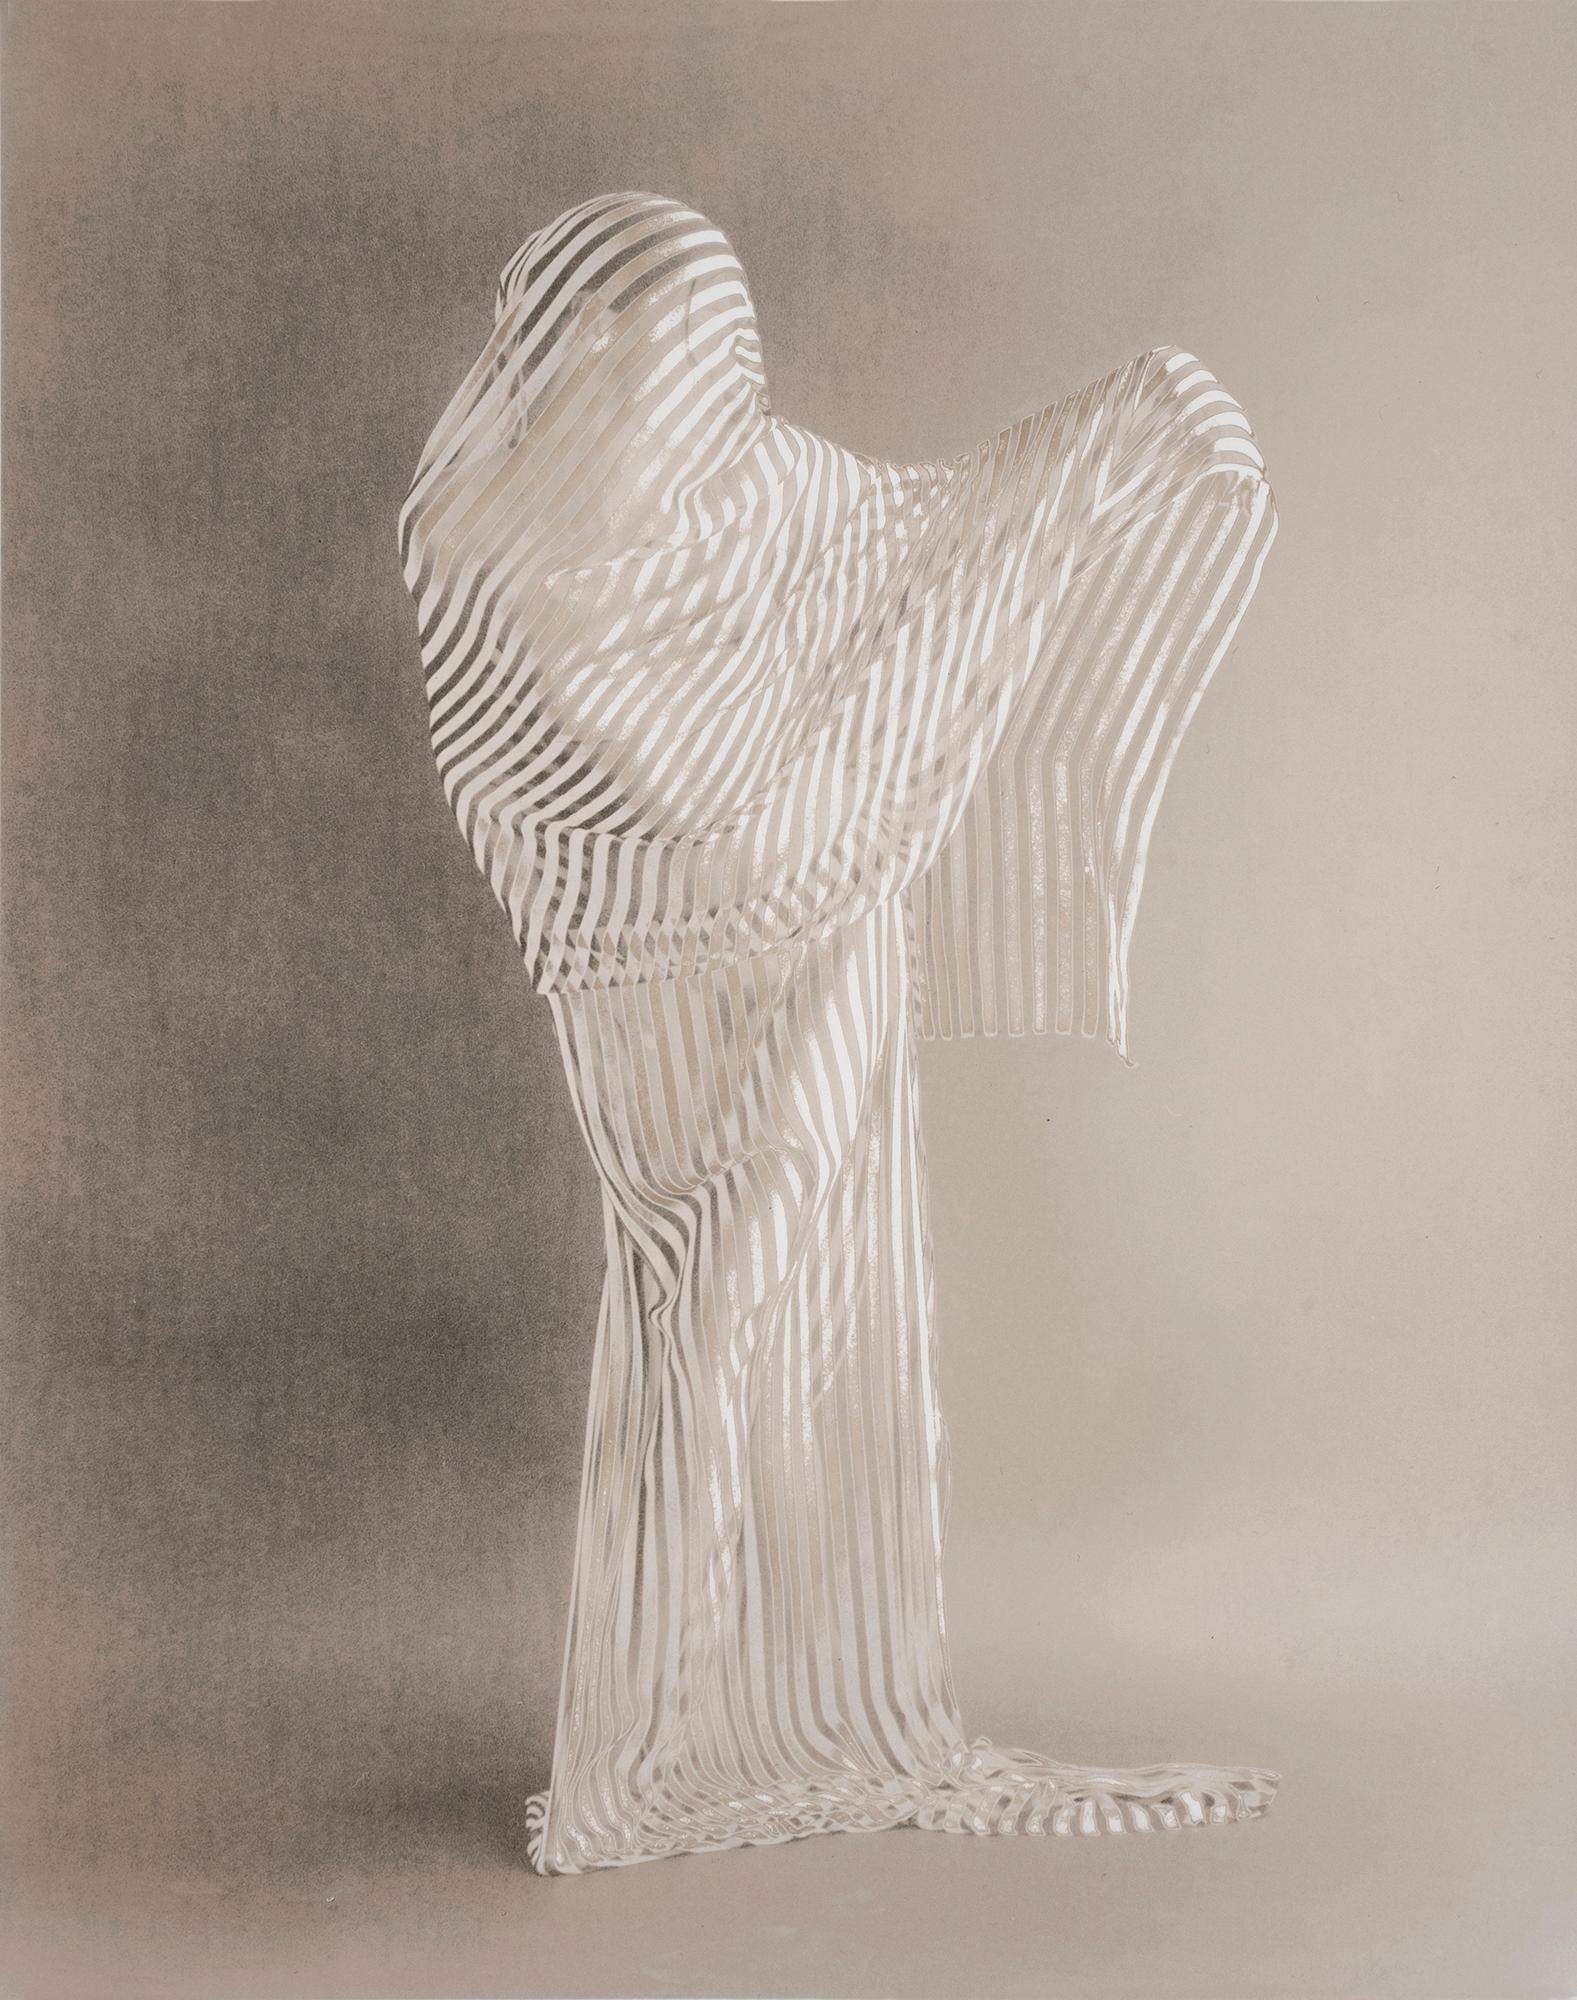 Untitled 801 - lith silver gelatin print